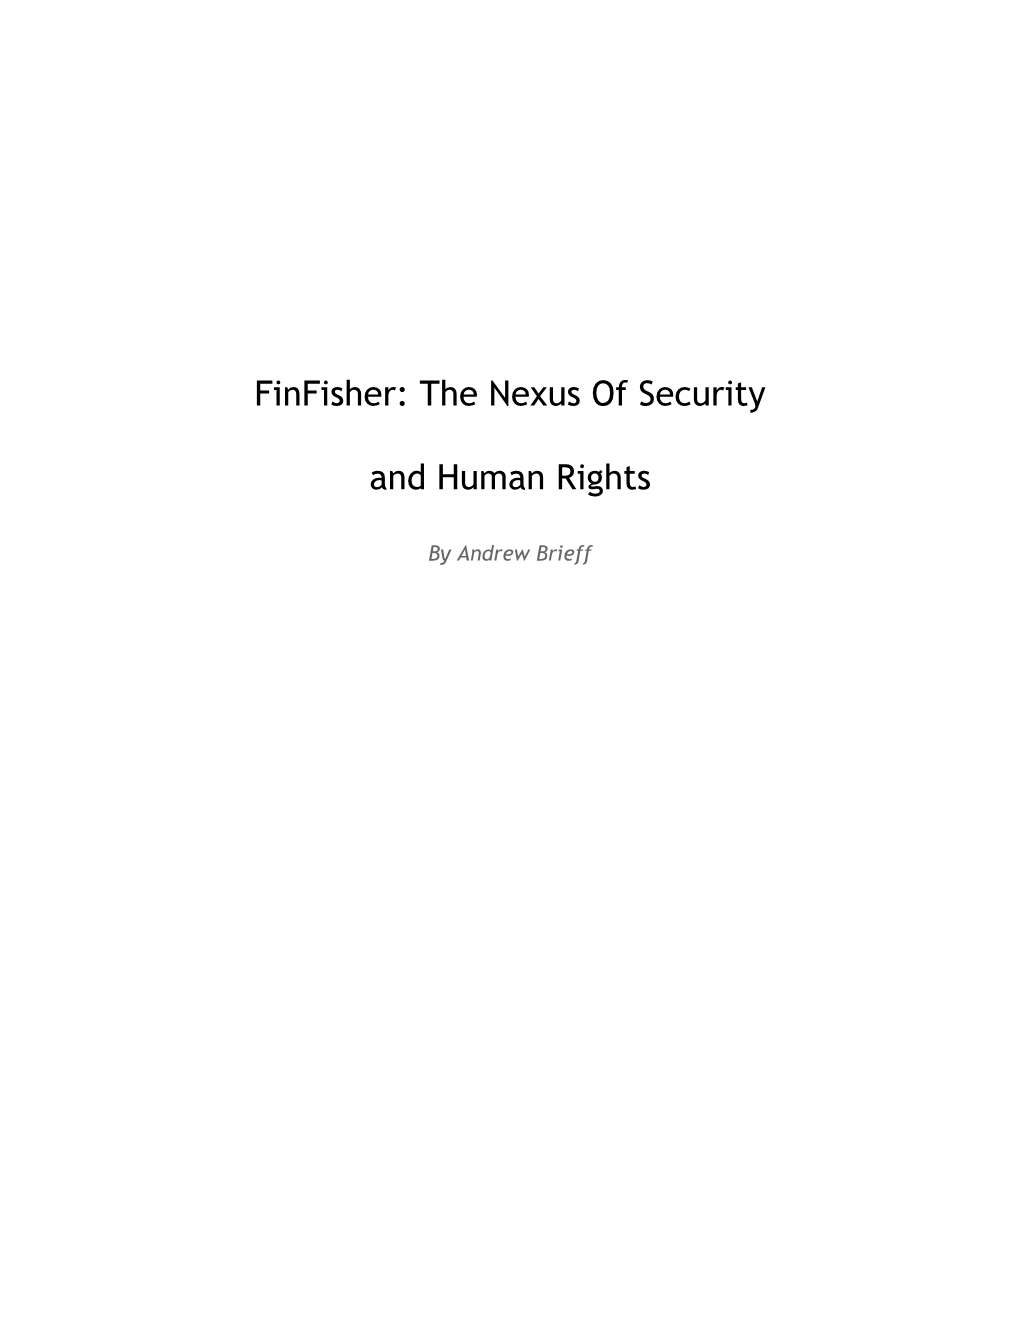 Finfisher: the Nexus of Security